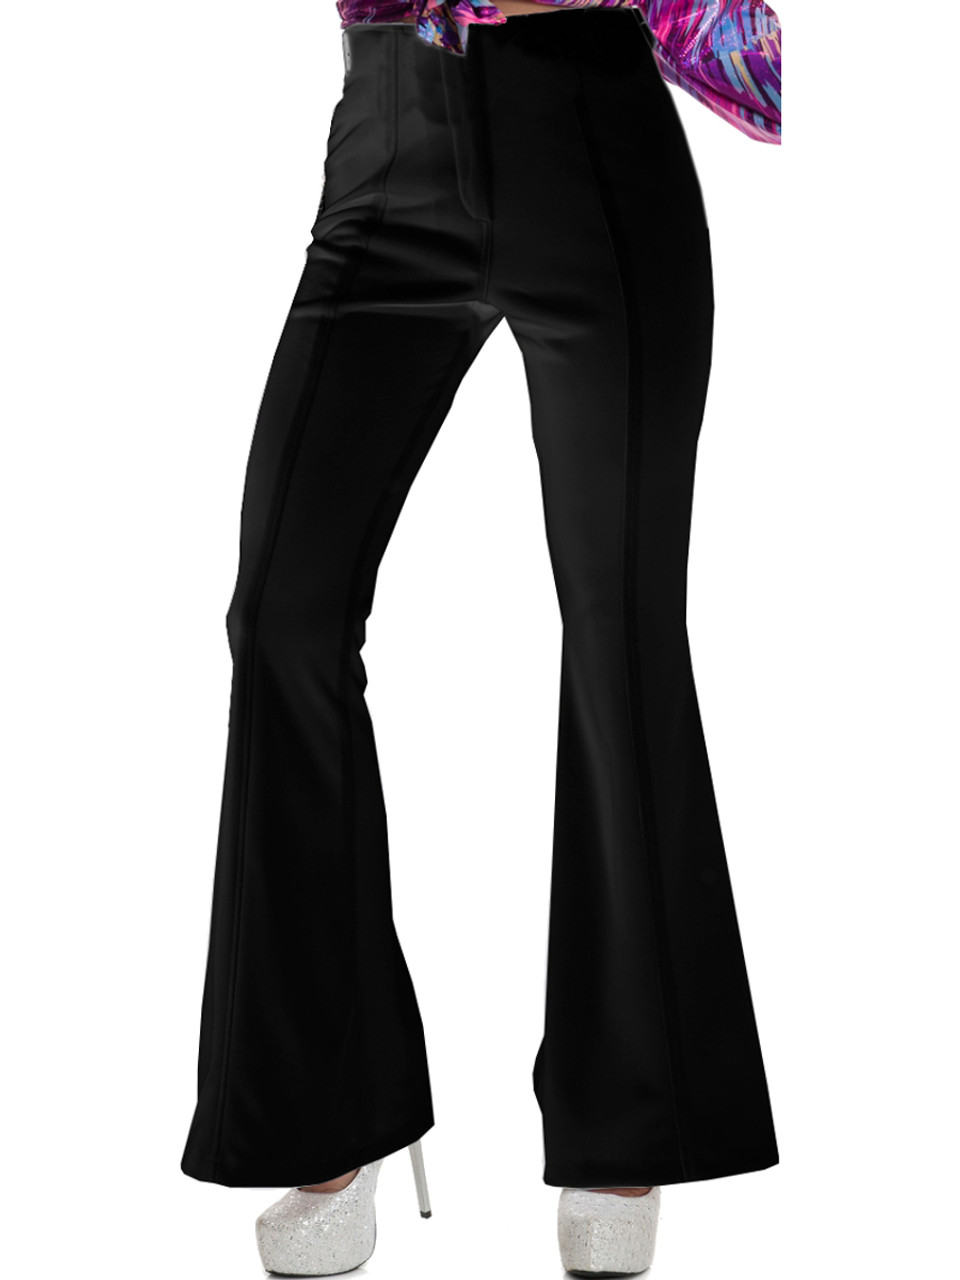 Womens 70s High Waisted Black Disco Pants